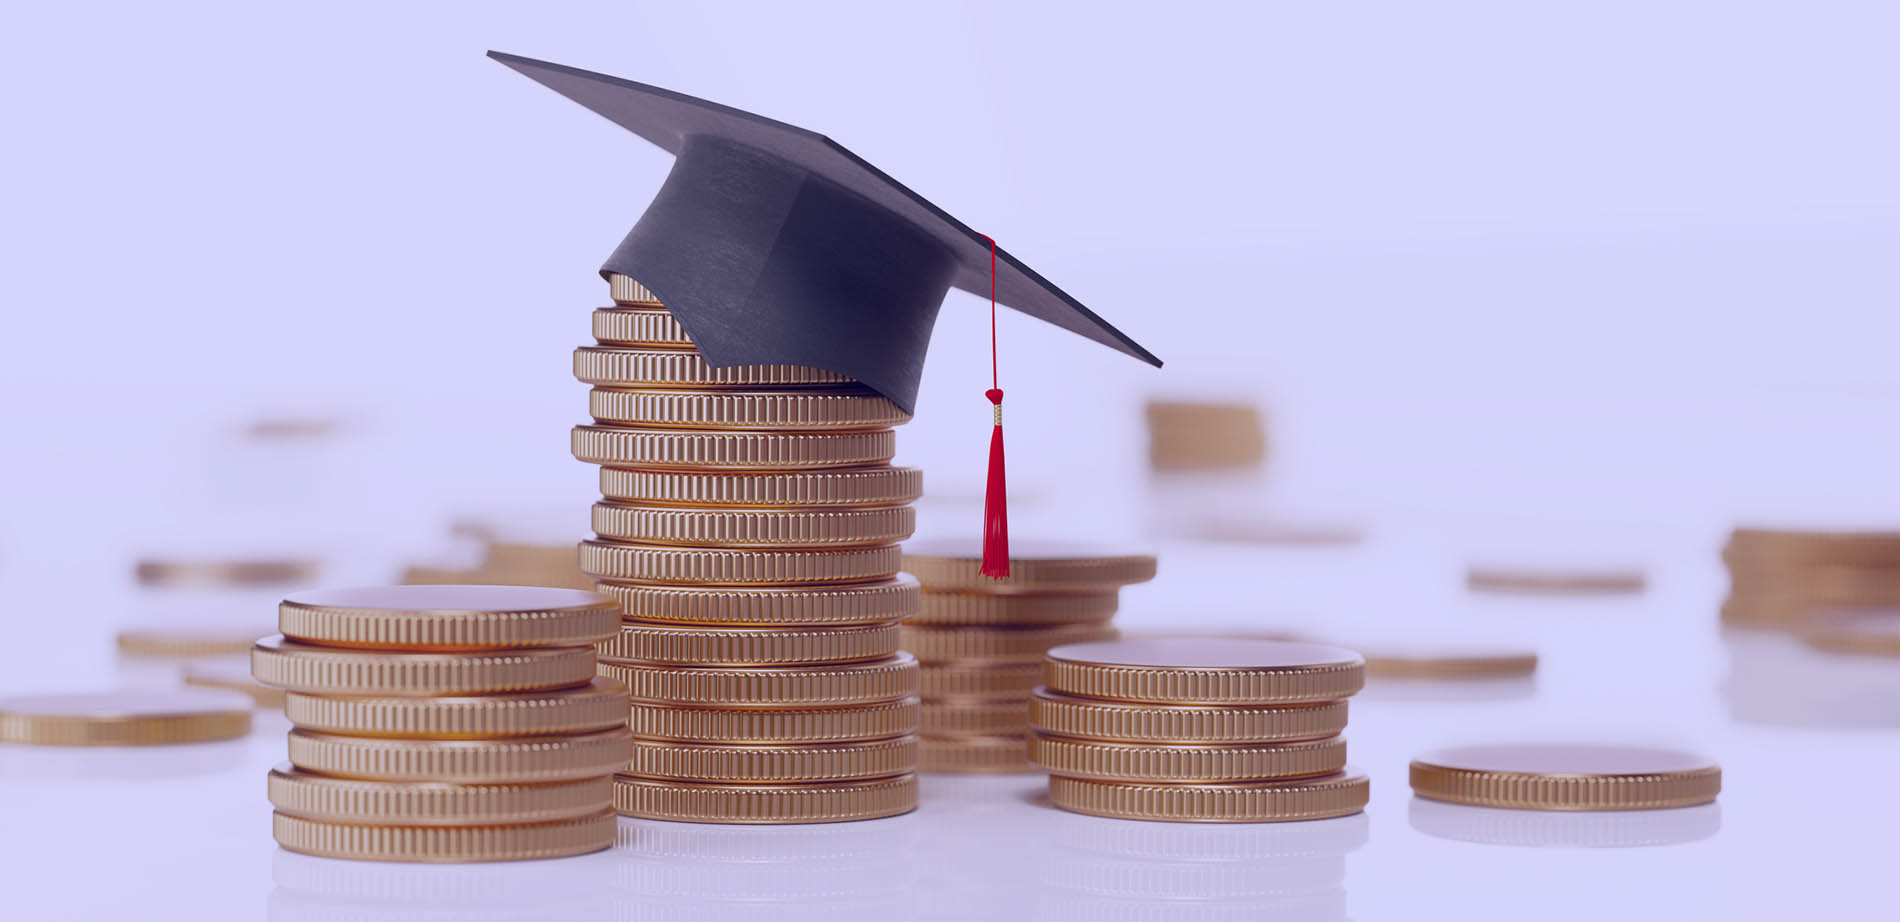 Graduation cap atop a stack of coins